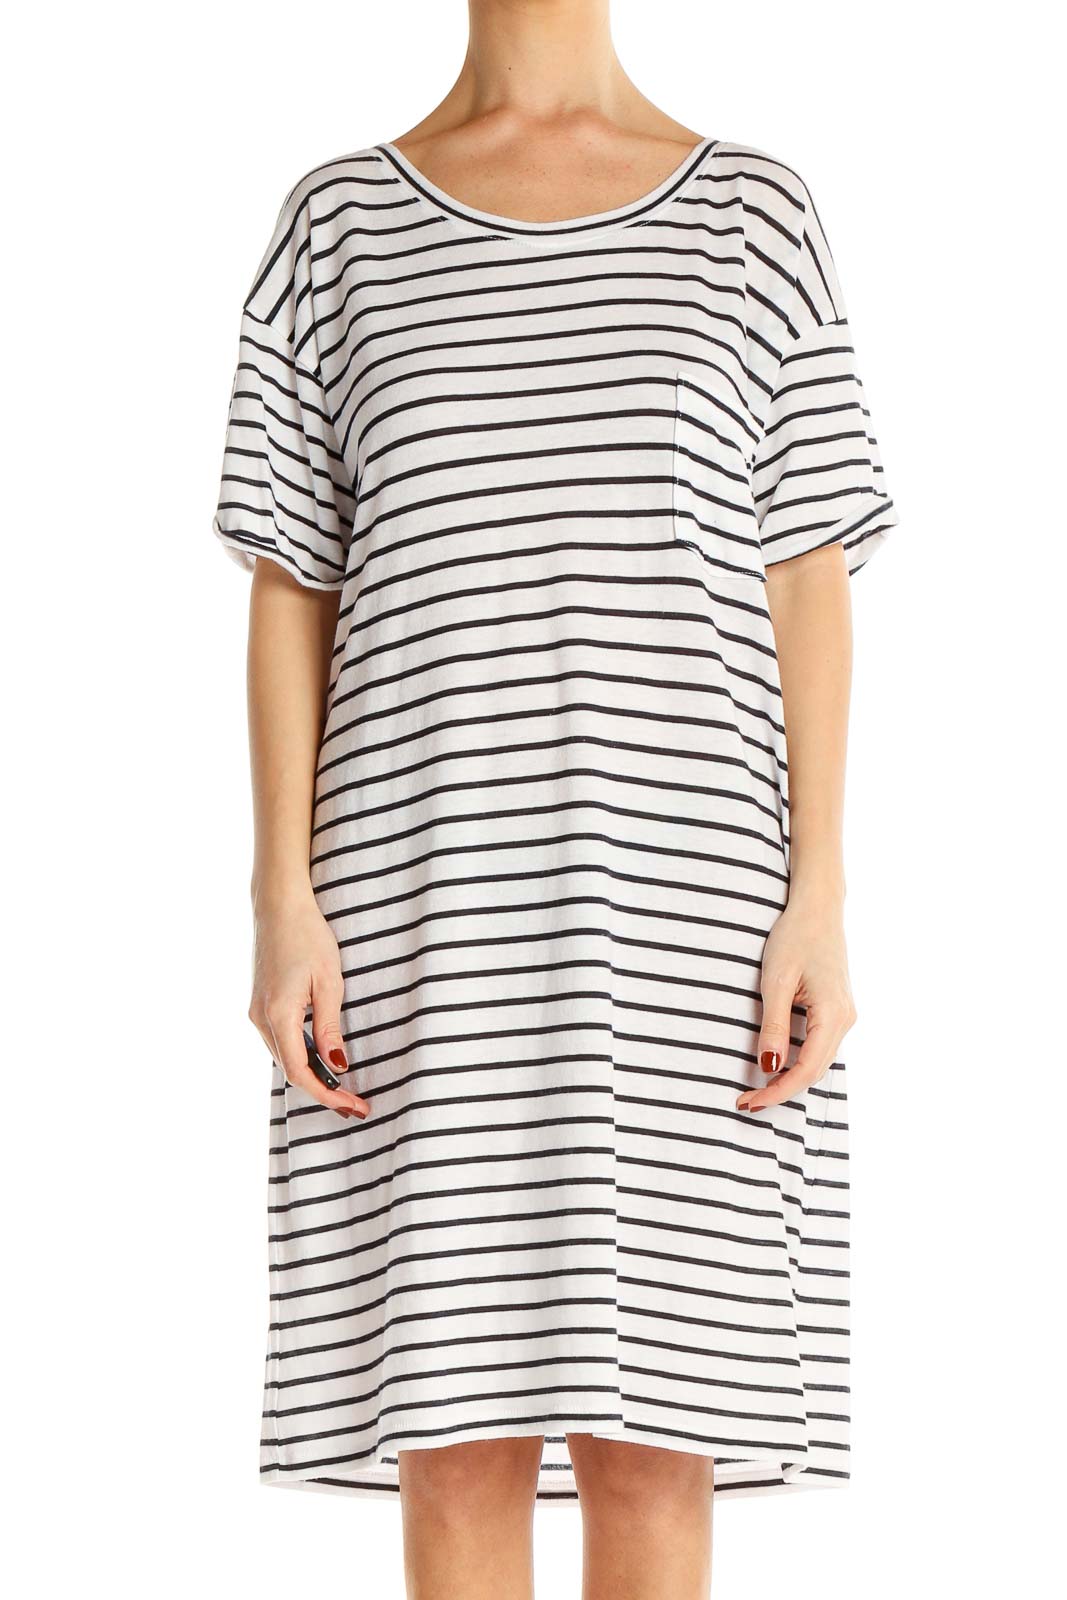 White Striped T-Shirt Dress Front